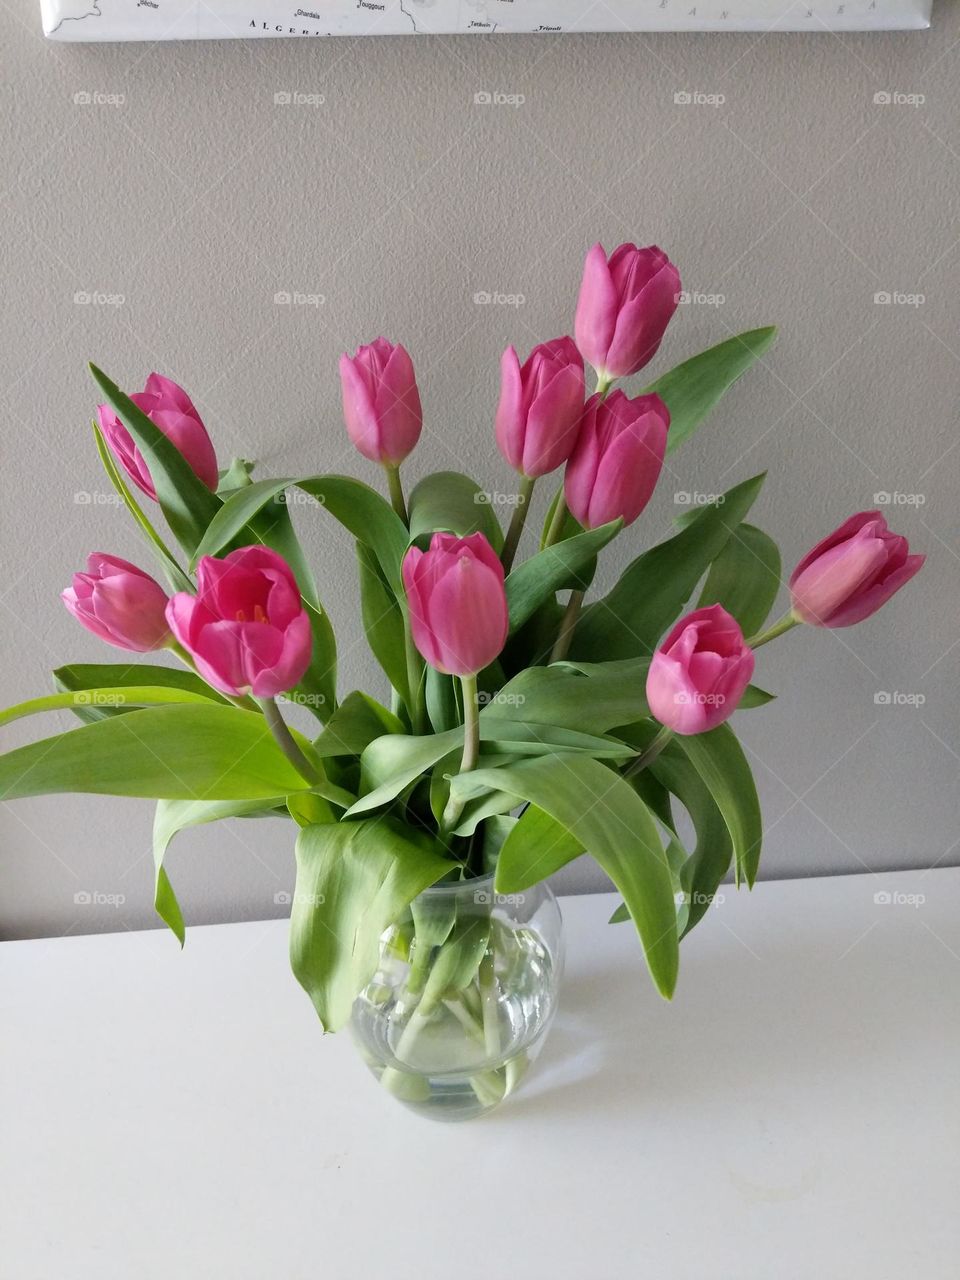 Vase of pink tulips